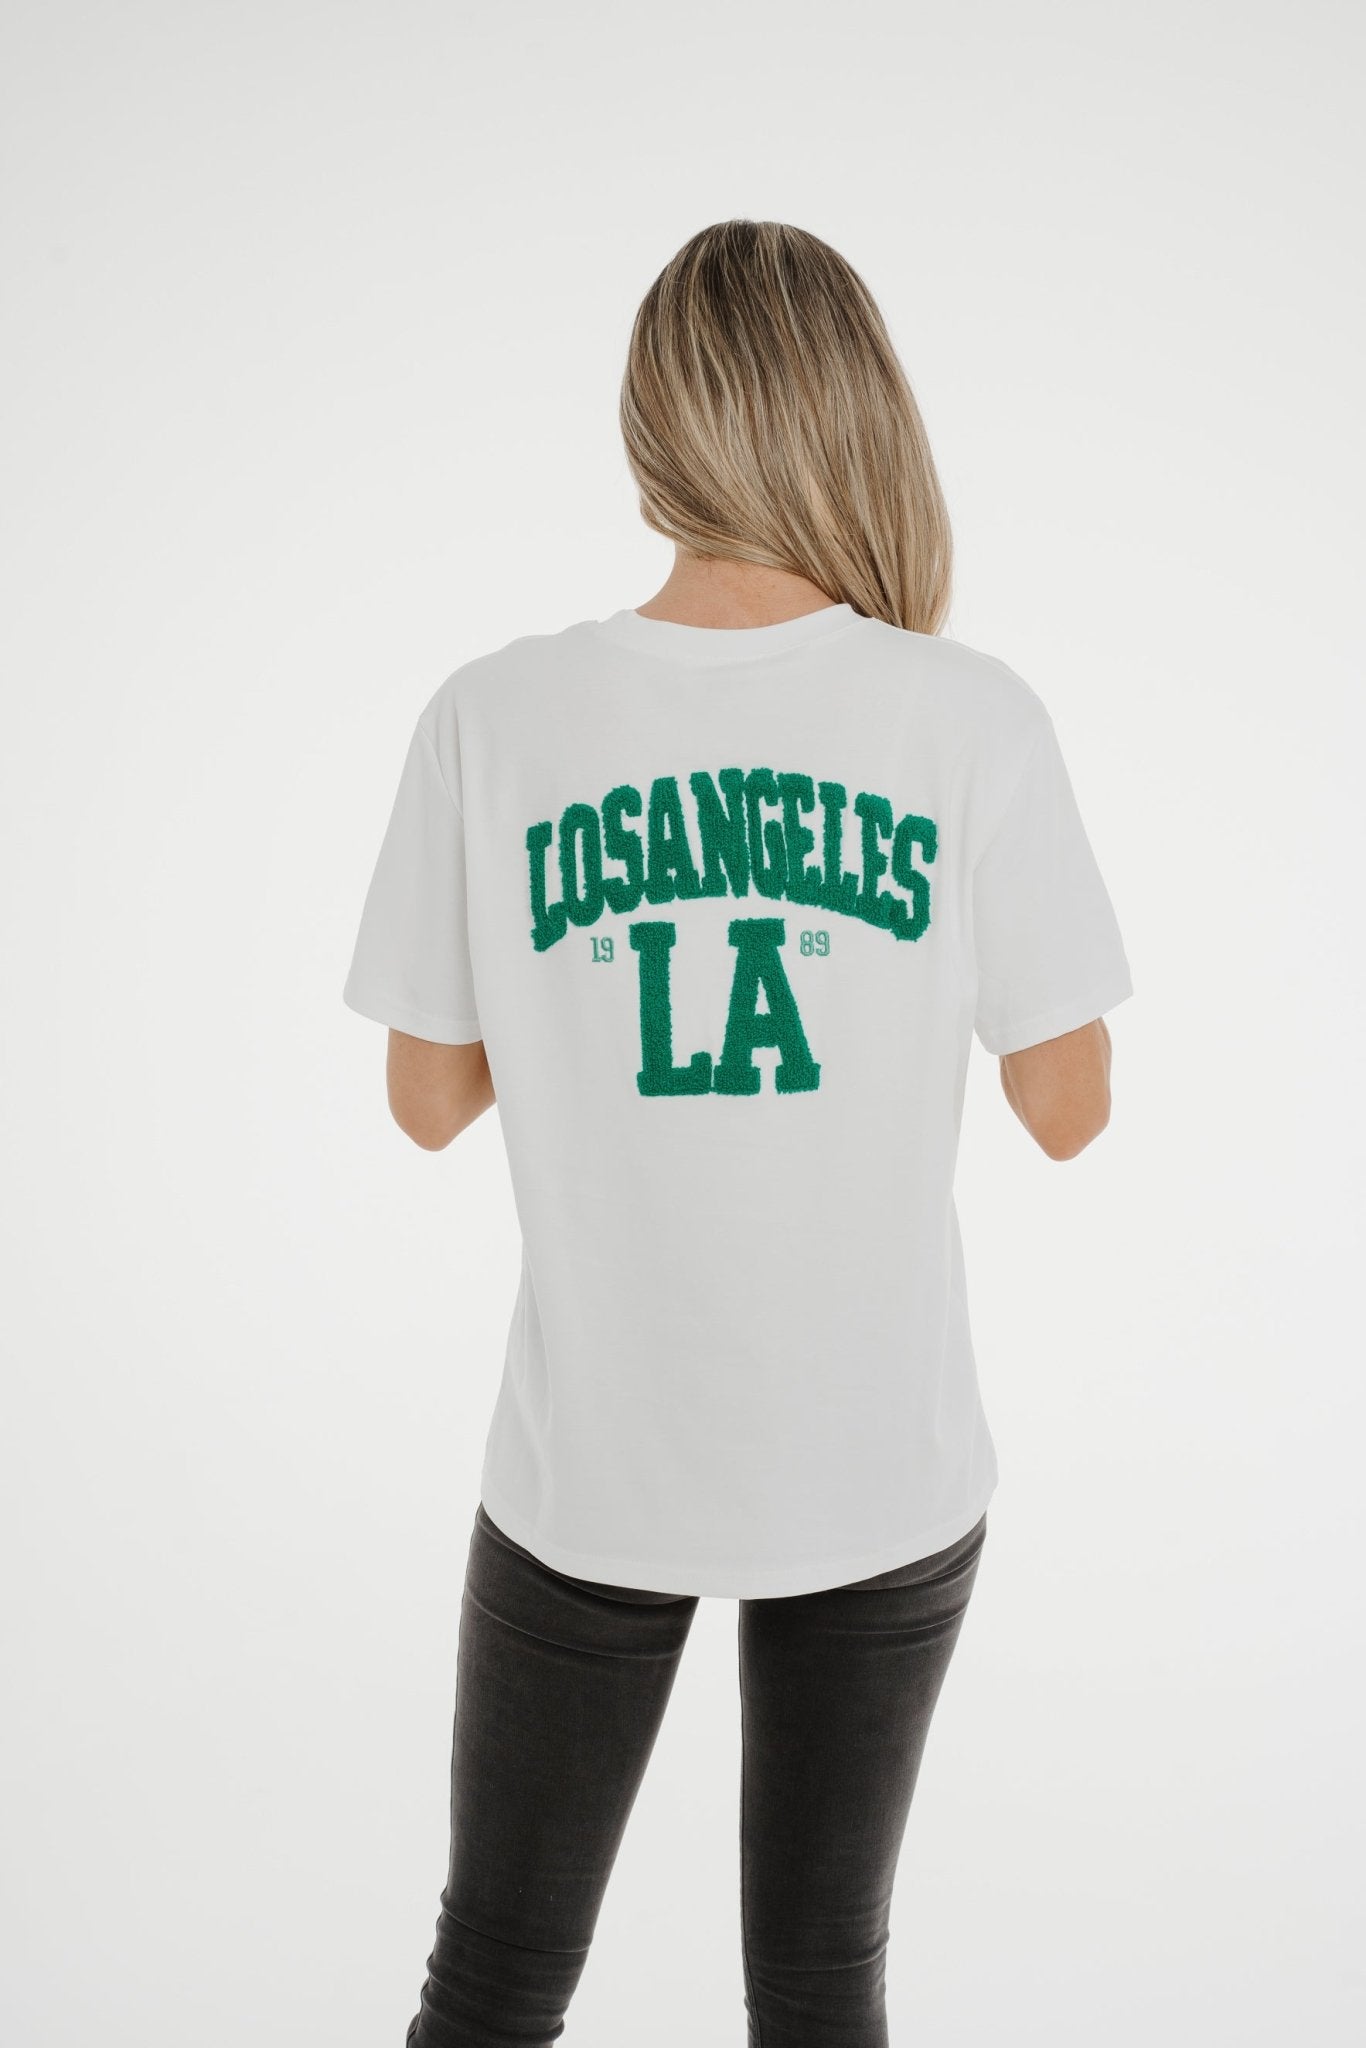 Millie LA Slogan T-Shirt In Green - The Walk in Wardrobe